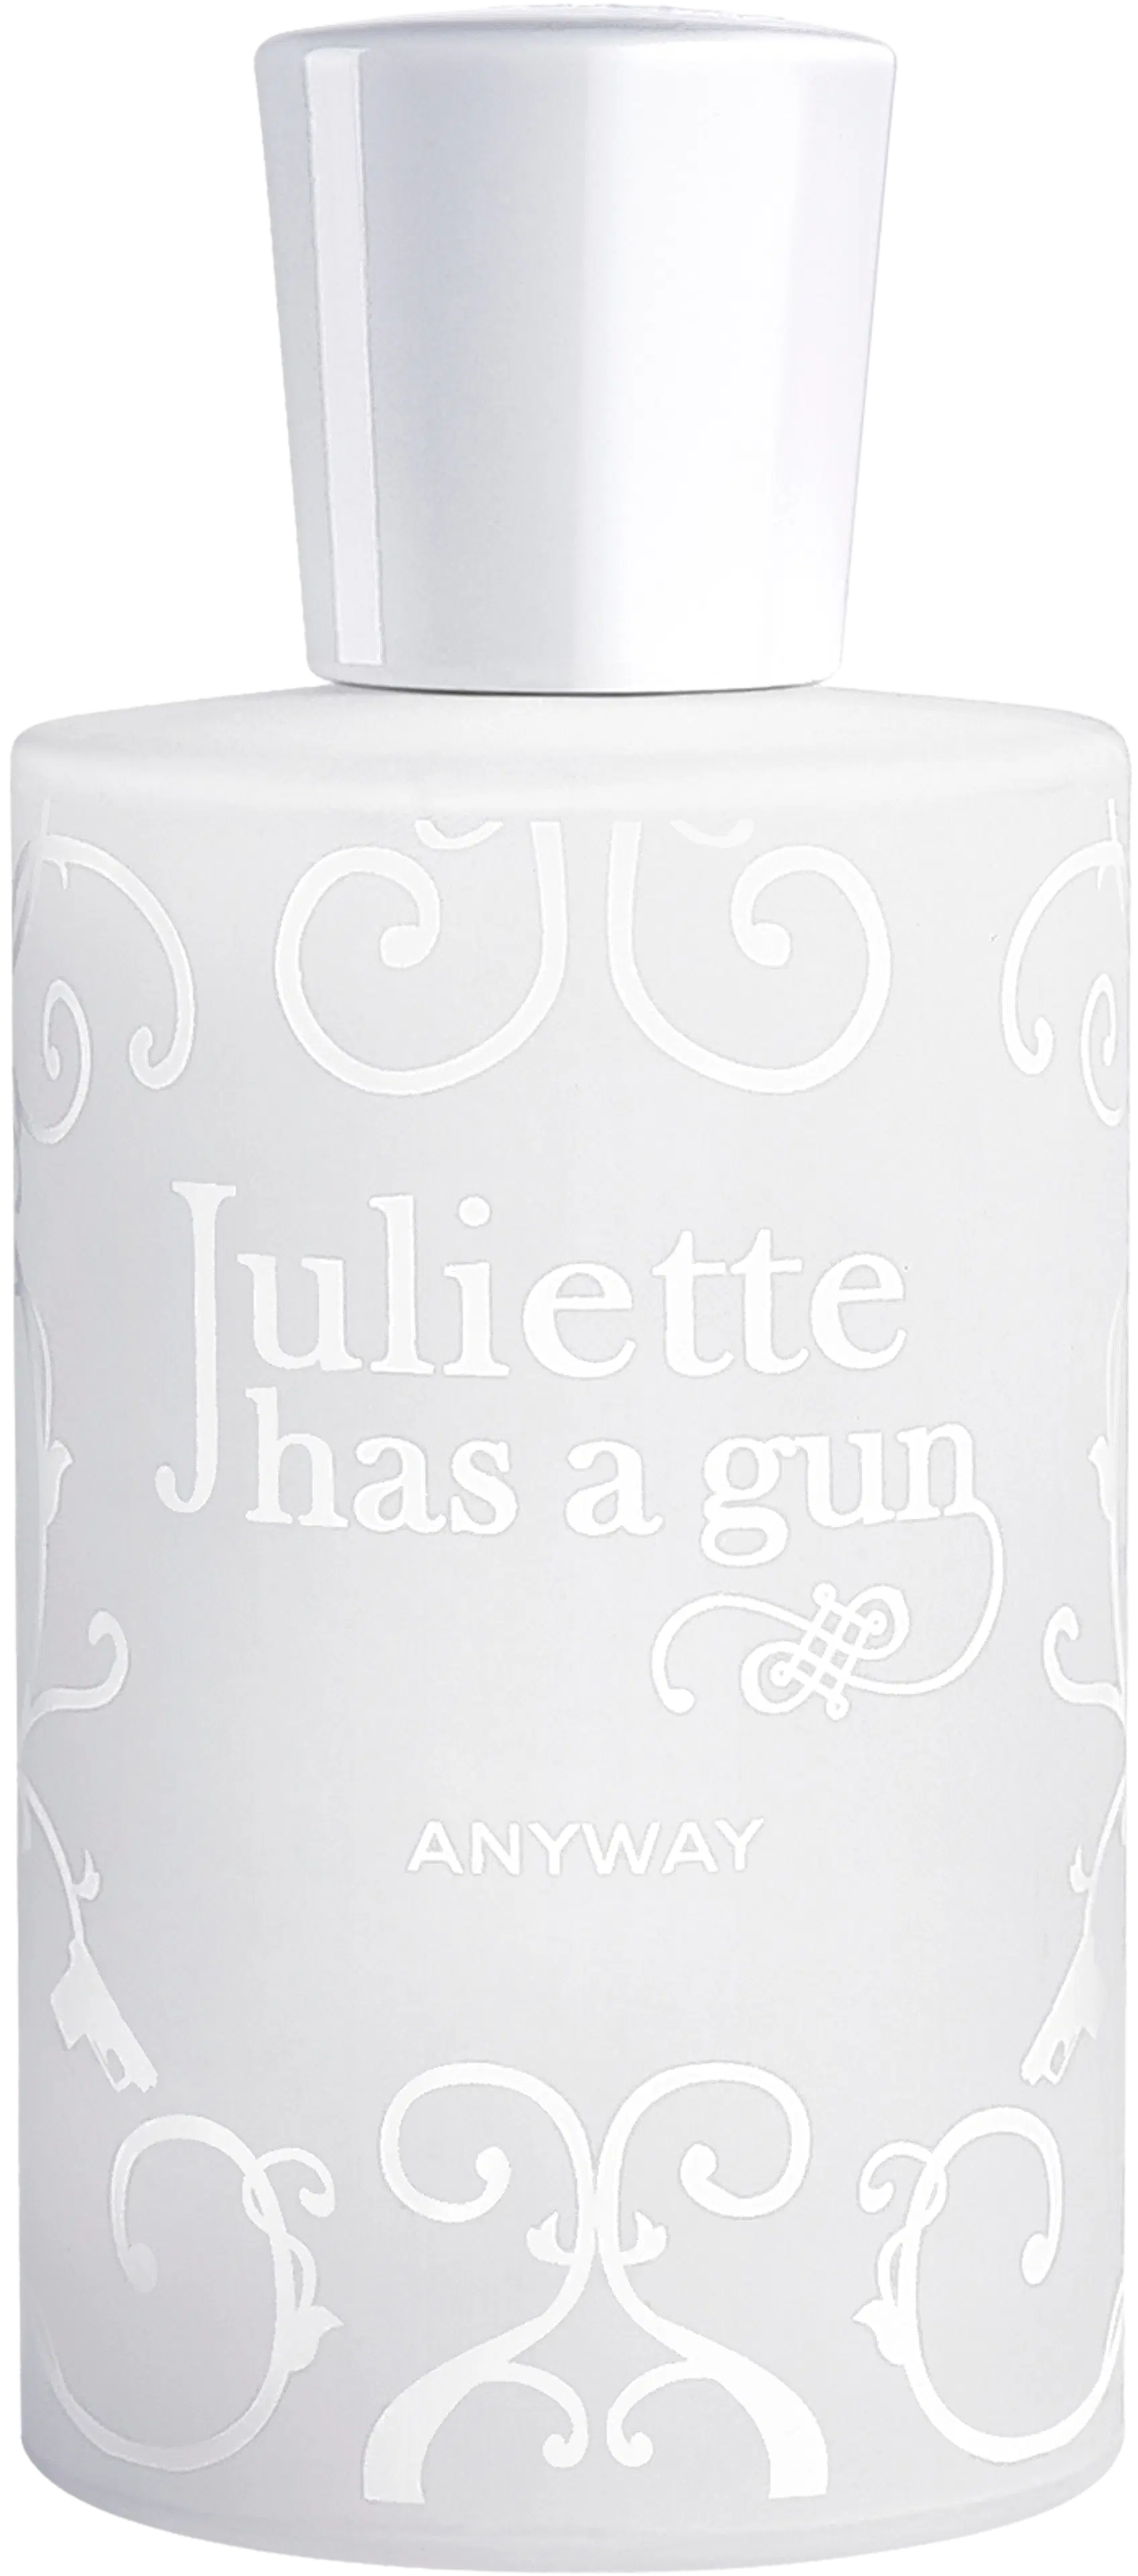 Juliette has a Gun Anyway Eau de parfum tuoksu 100 ml